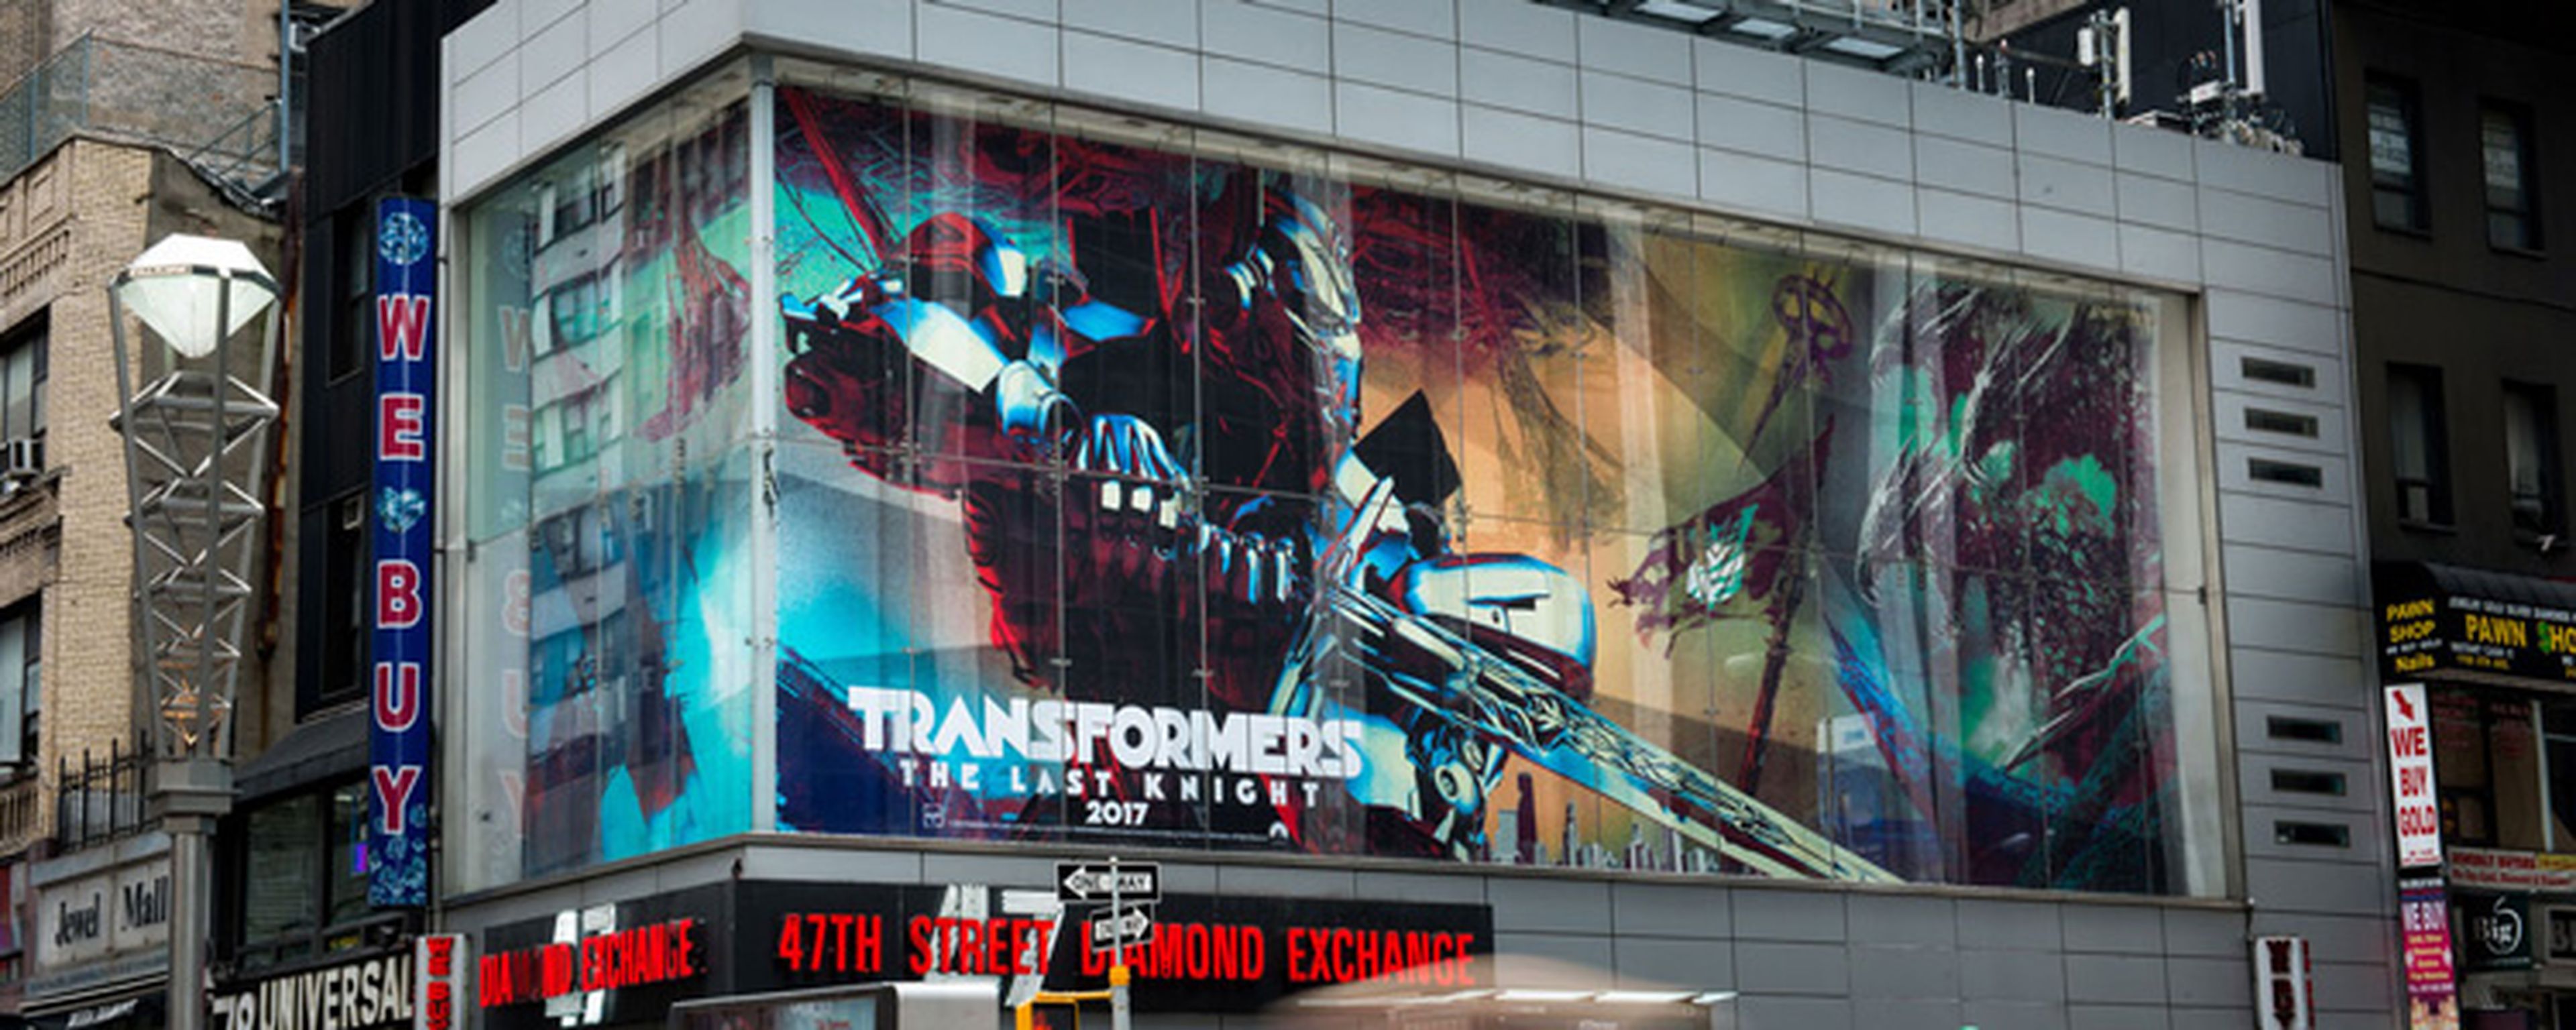 Transformers: The last knight